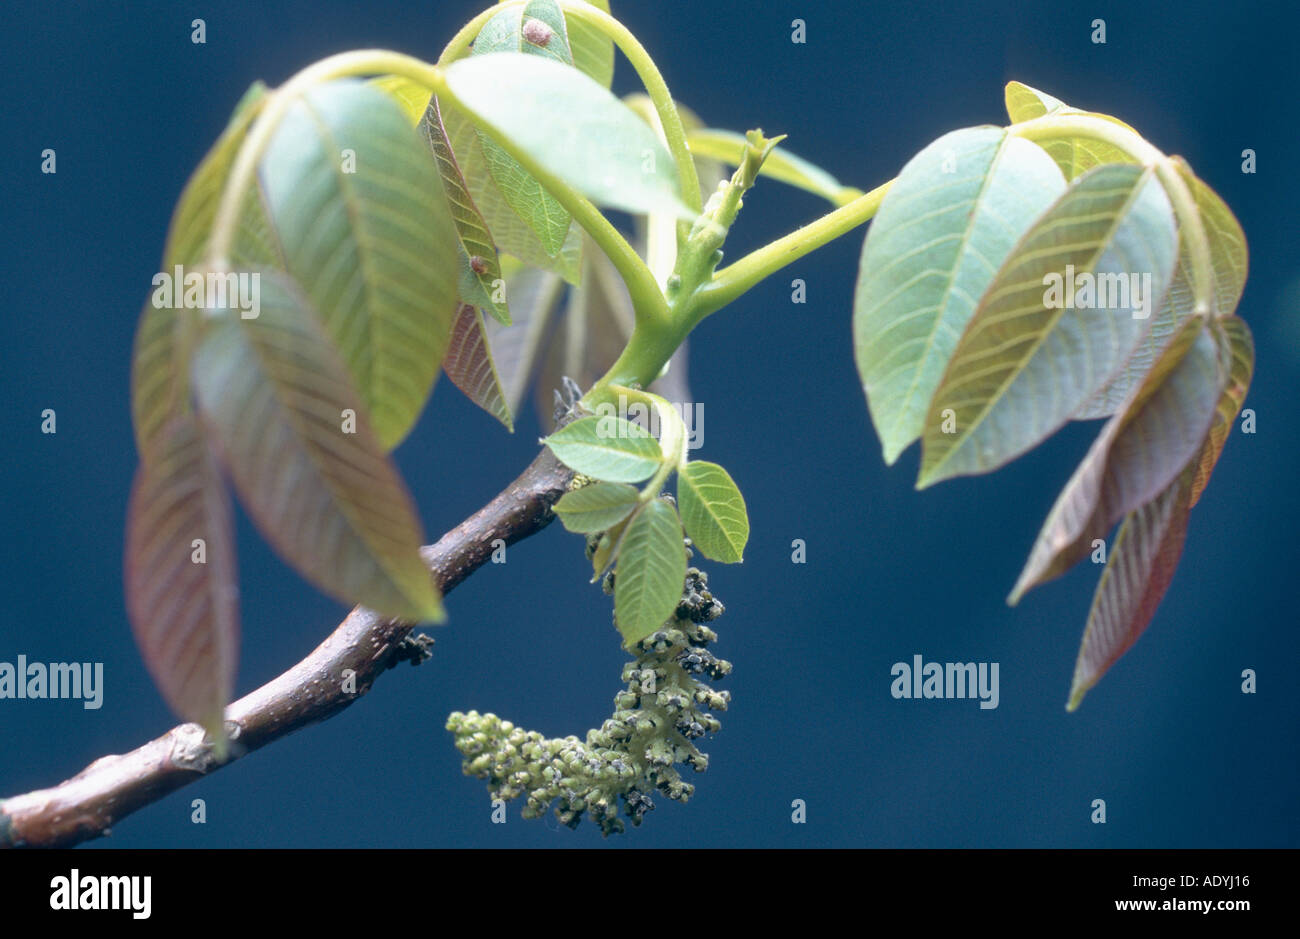 walnut (Juglans regia), twig with female blossoms. Stock Photo